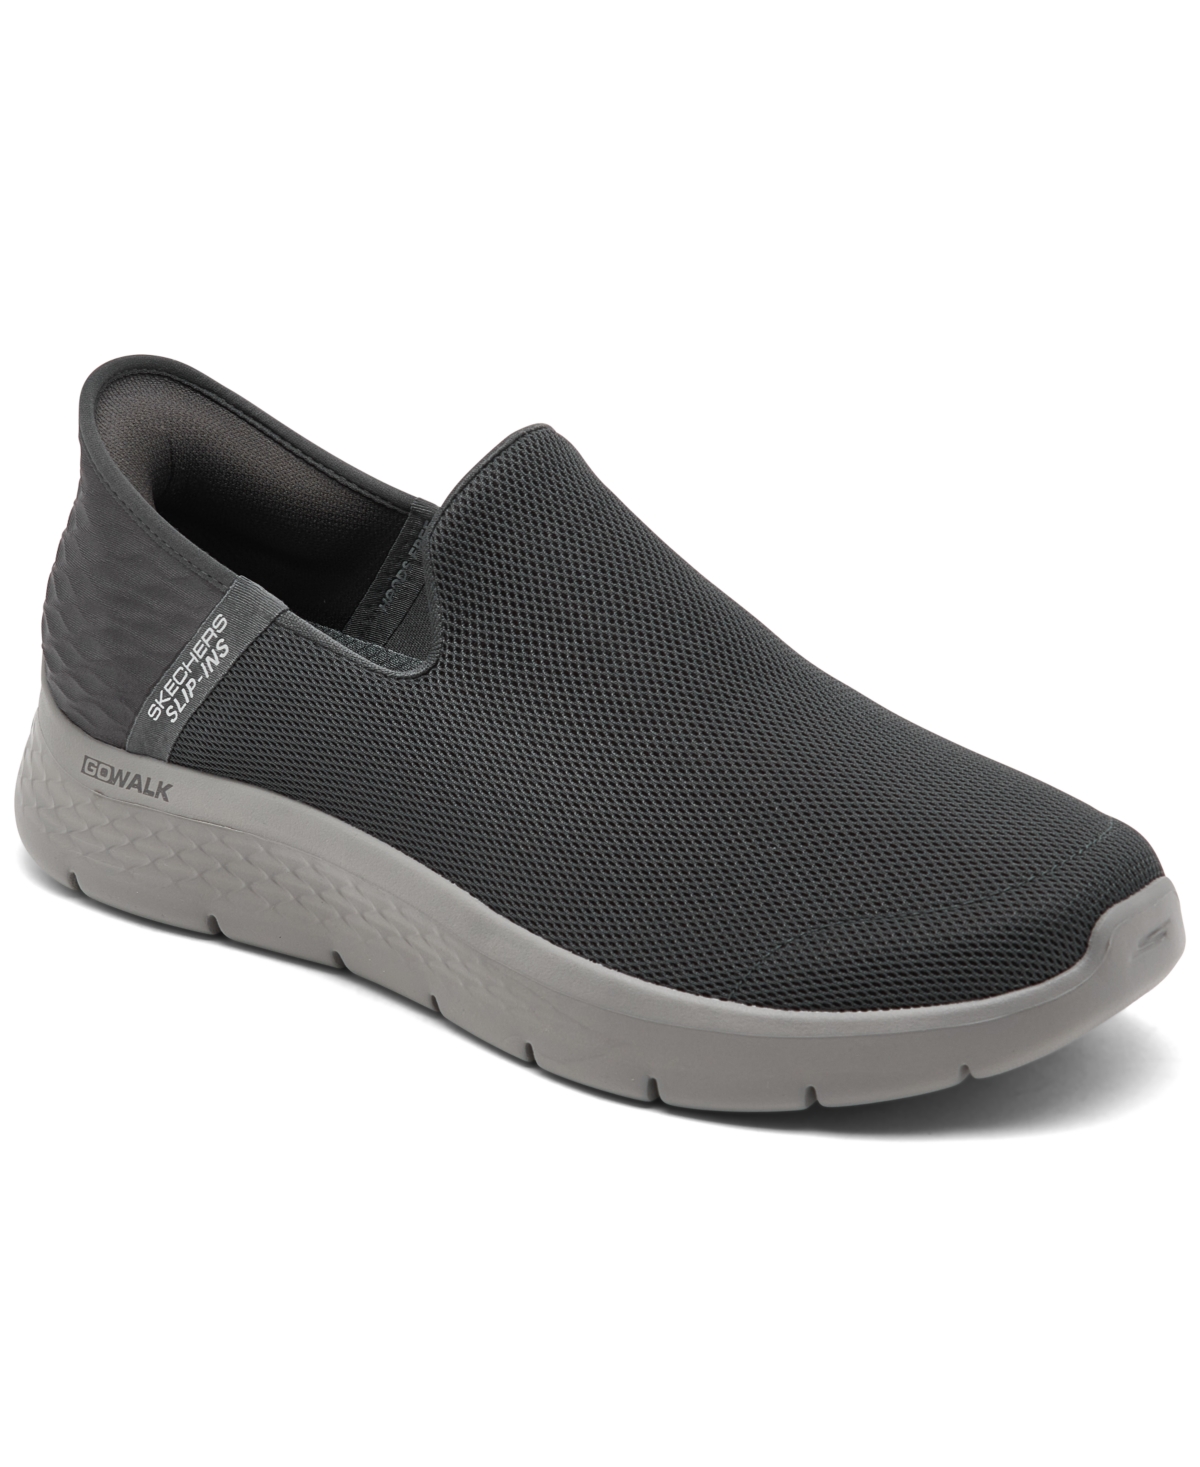 Men's Slip-Ins GoWalk Flex Slip-On Casual Sneakers from Finish Line - Dark Grey